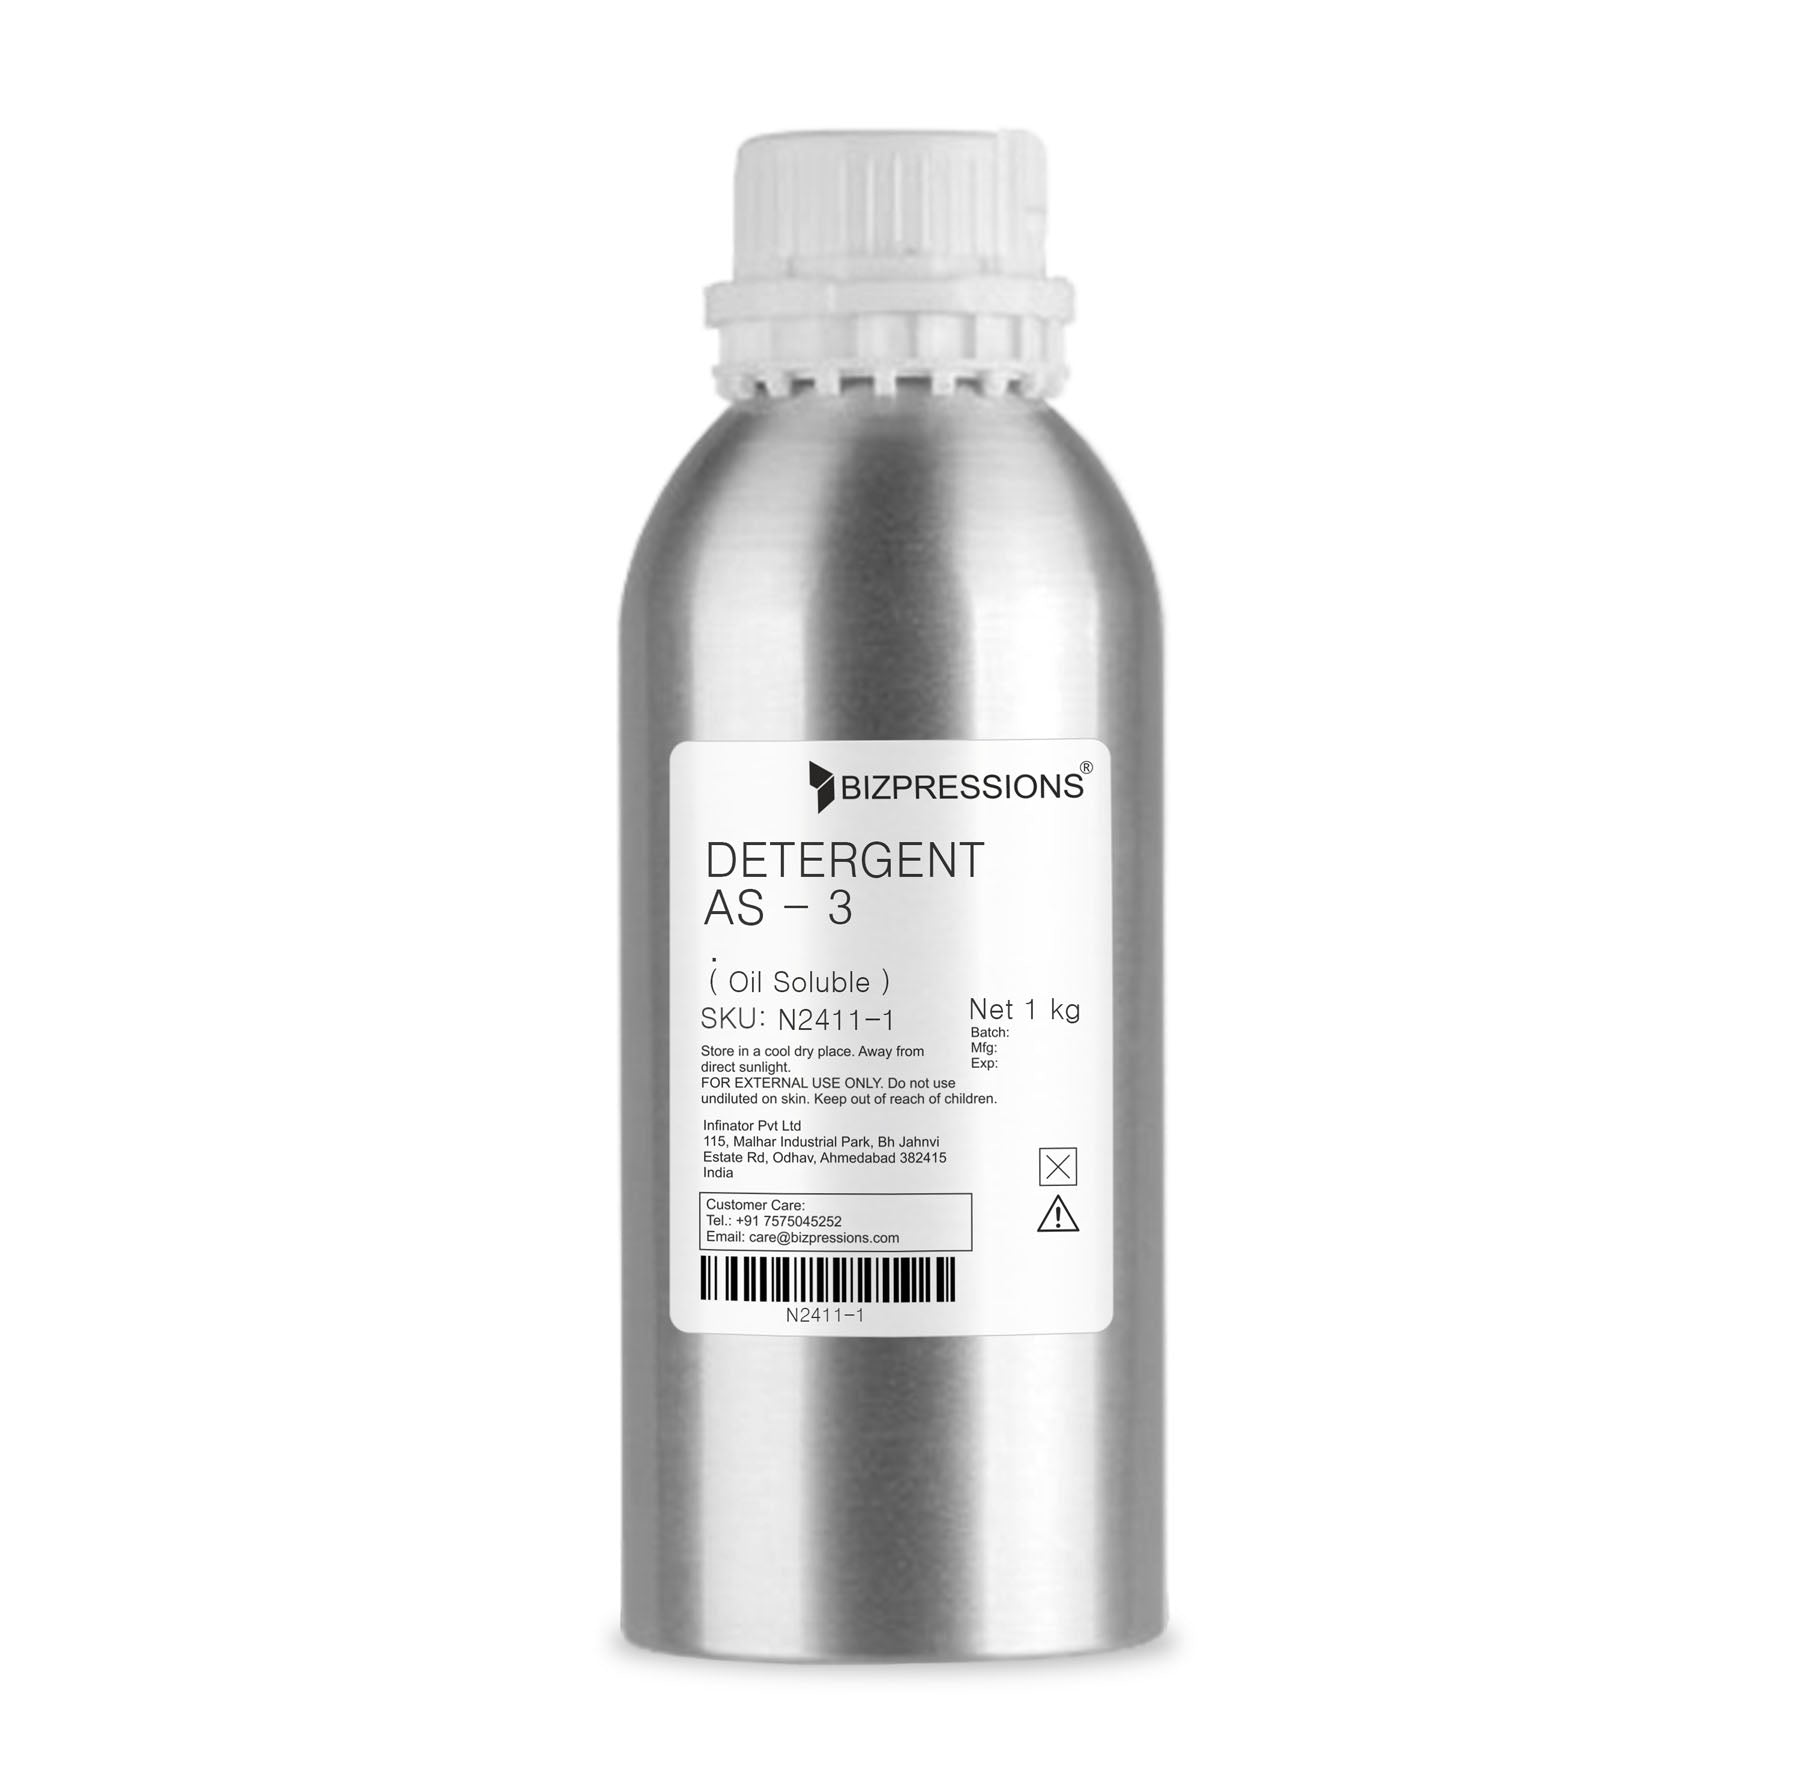 DETERGENT AS - 3 - Fragrance ( Oil Soluble ) - 1 kg